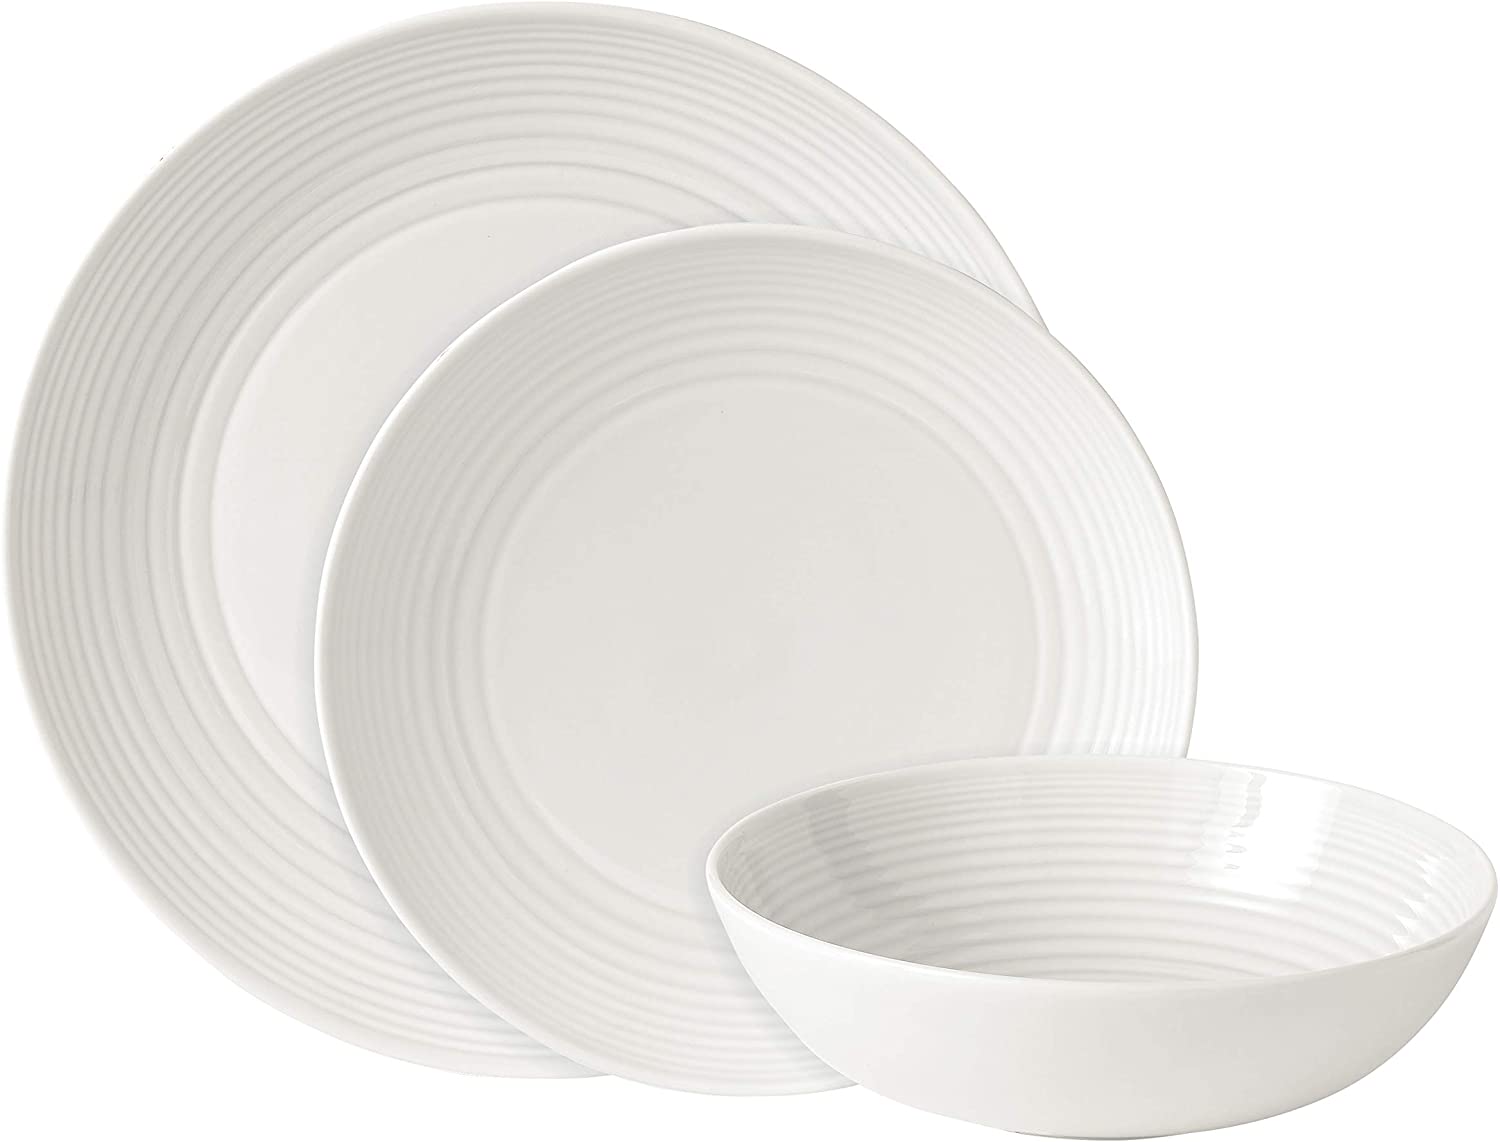 Royal Doulton 12-Piece Tableware Set, Maze White